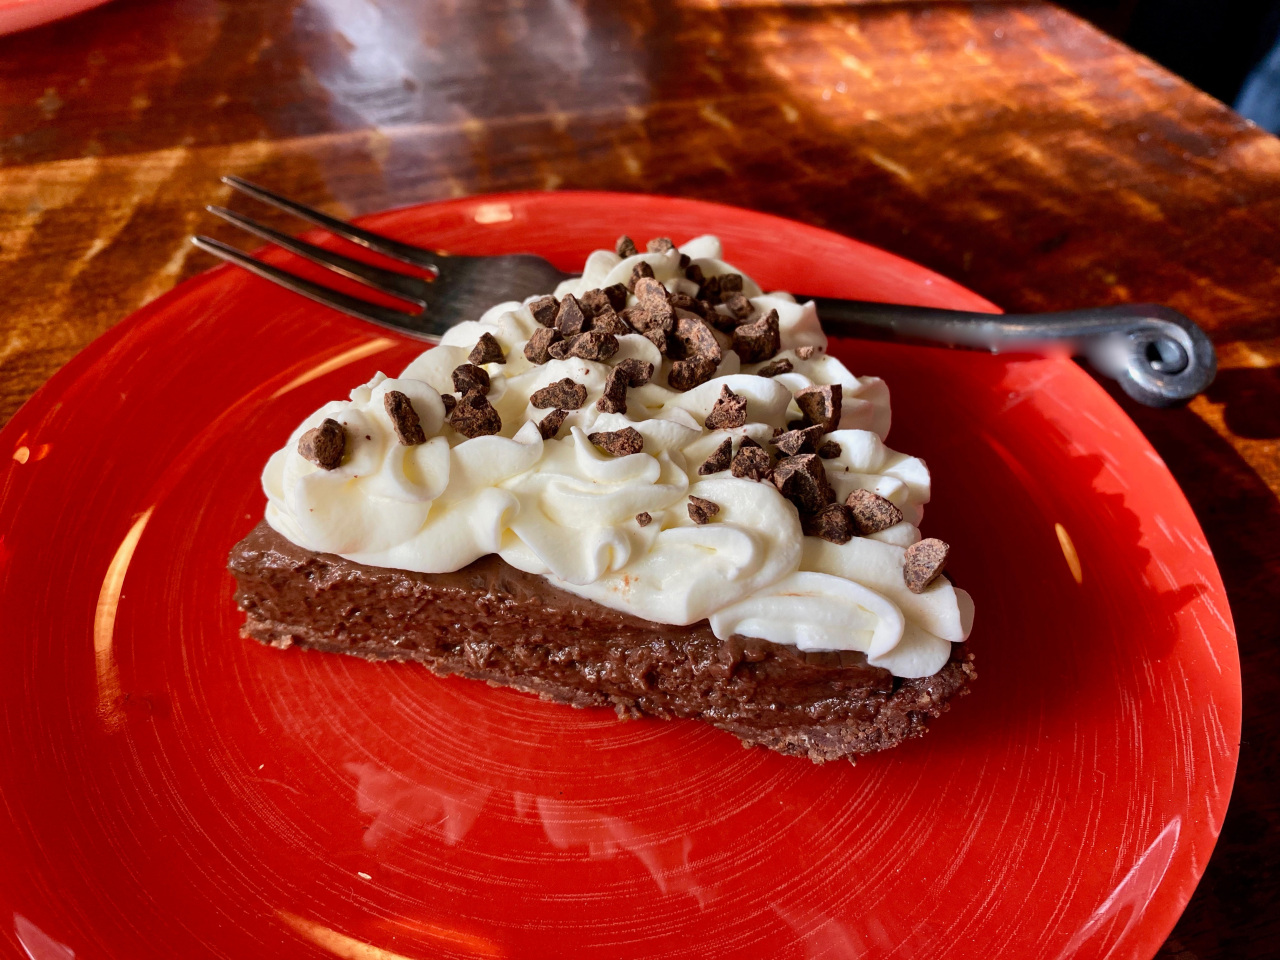 Chocolate Cream Pie